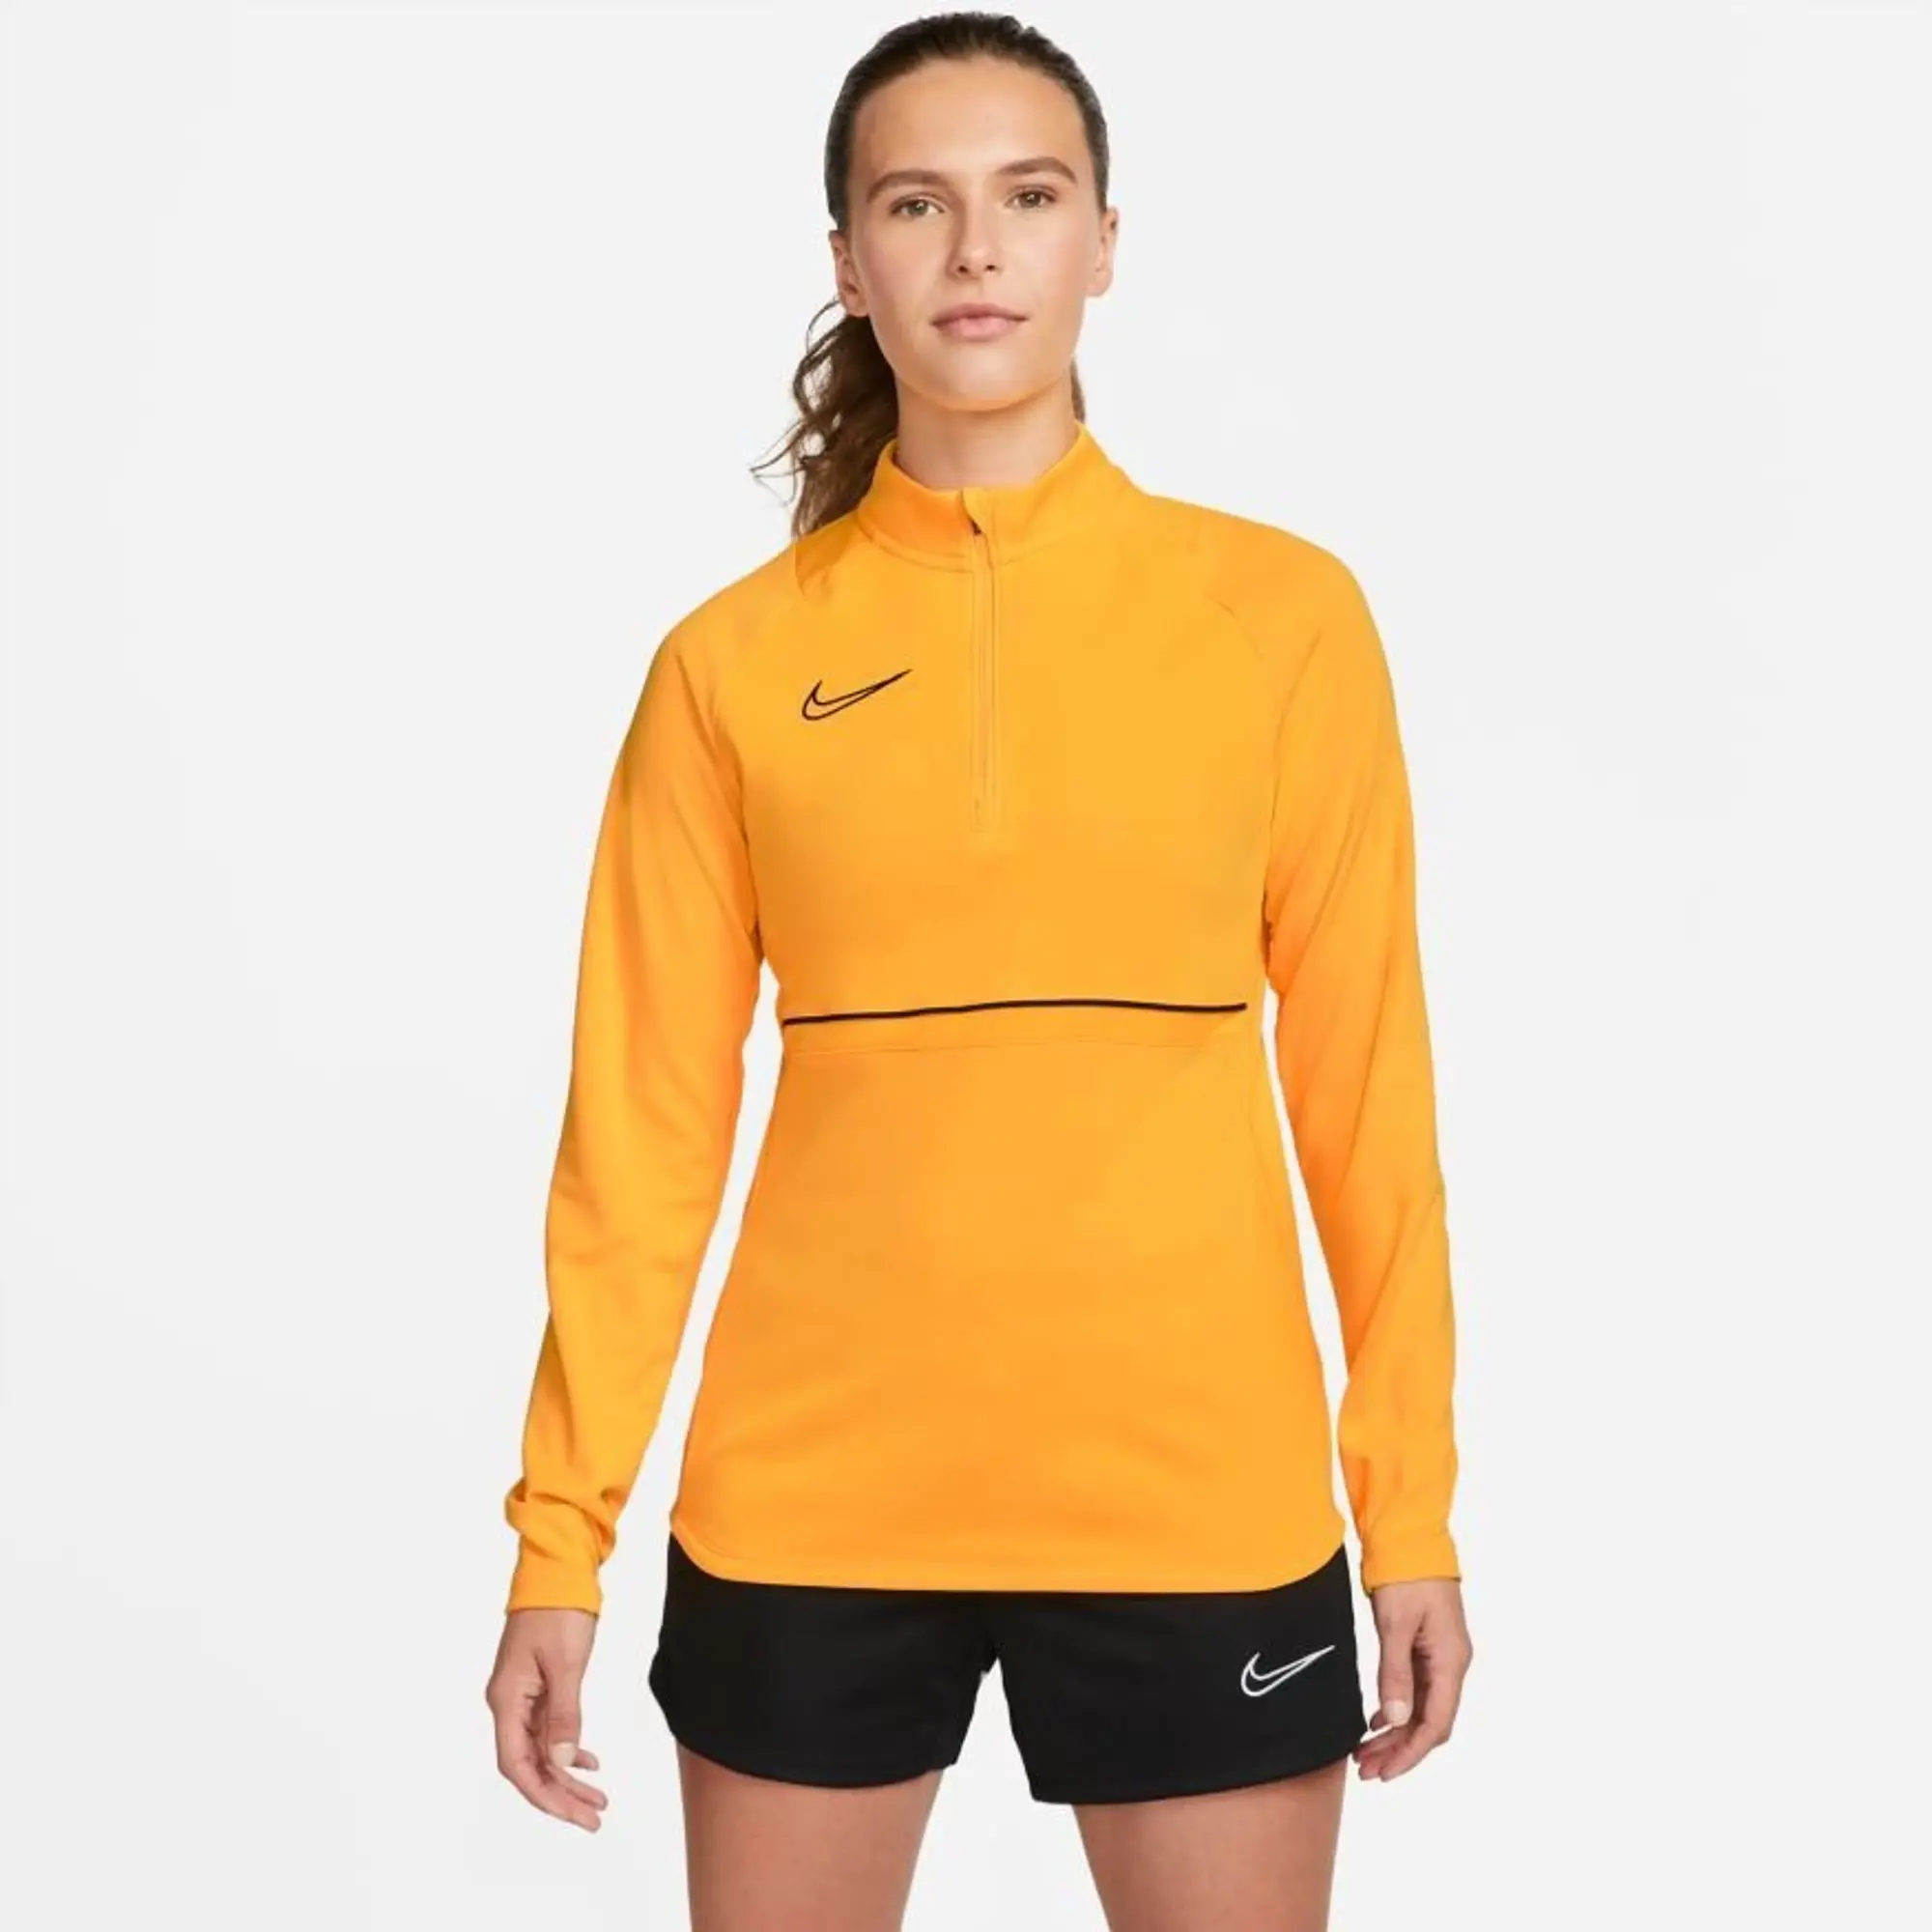 Nike Women's Layer Top - Orange